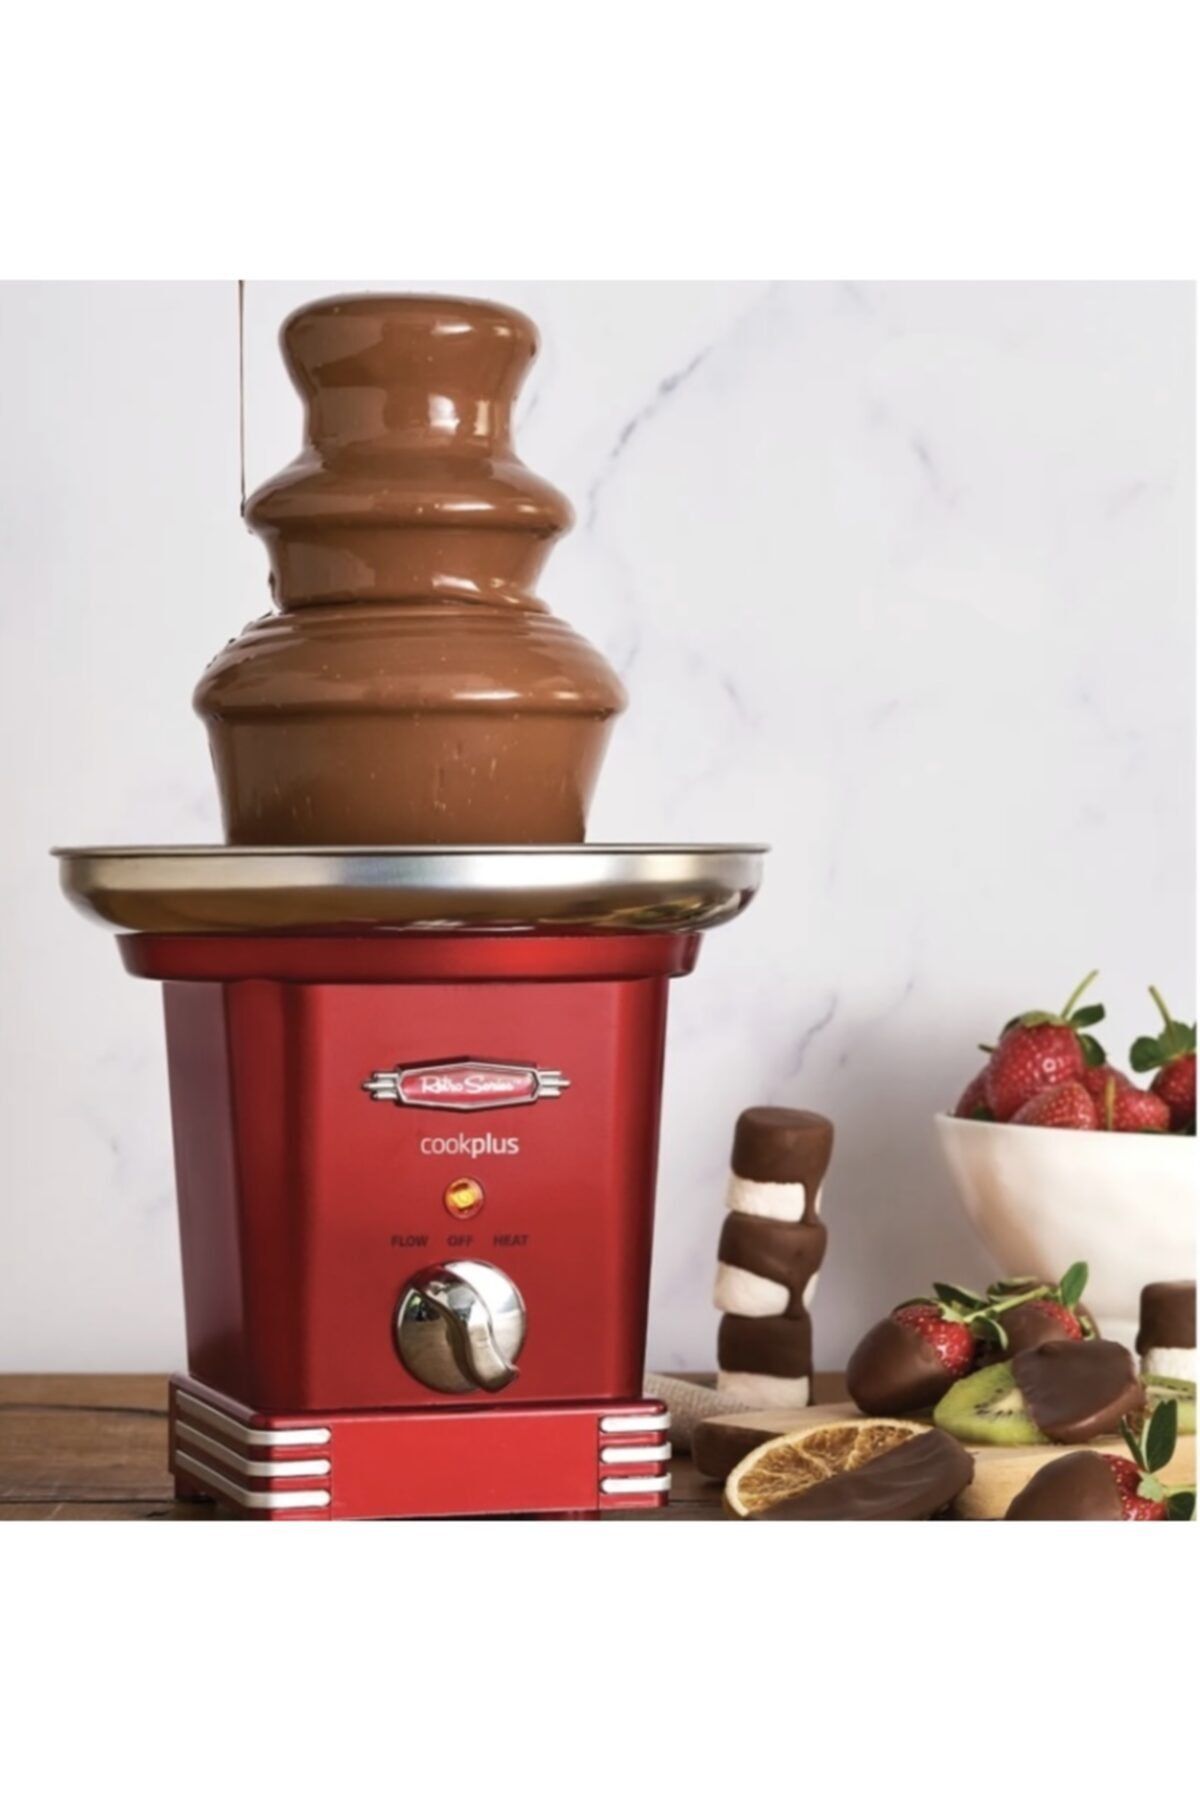 Cookplus Mutfaksever Fondü Makinesi Ve Çikolata Şelalesi